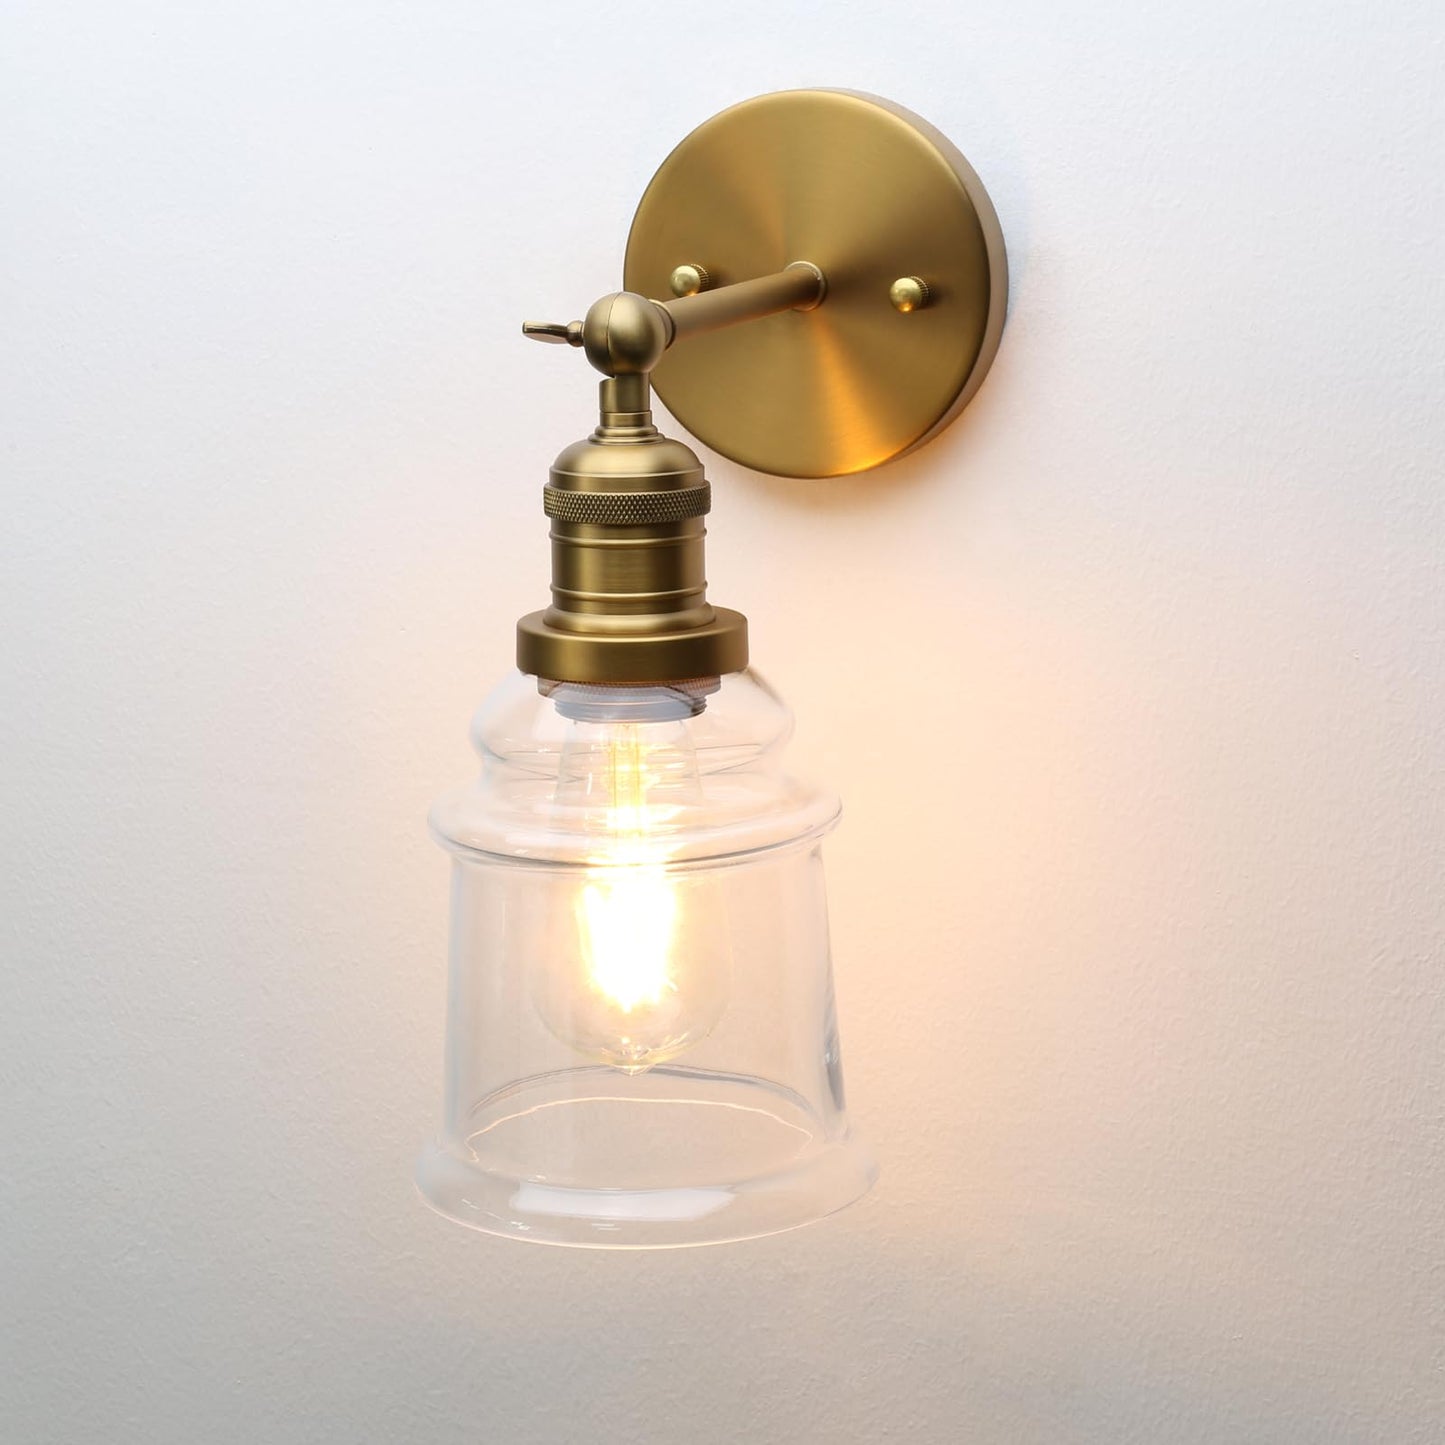 Vintage Wall Sconce Light, Classic Wall Vanity Lighting